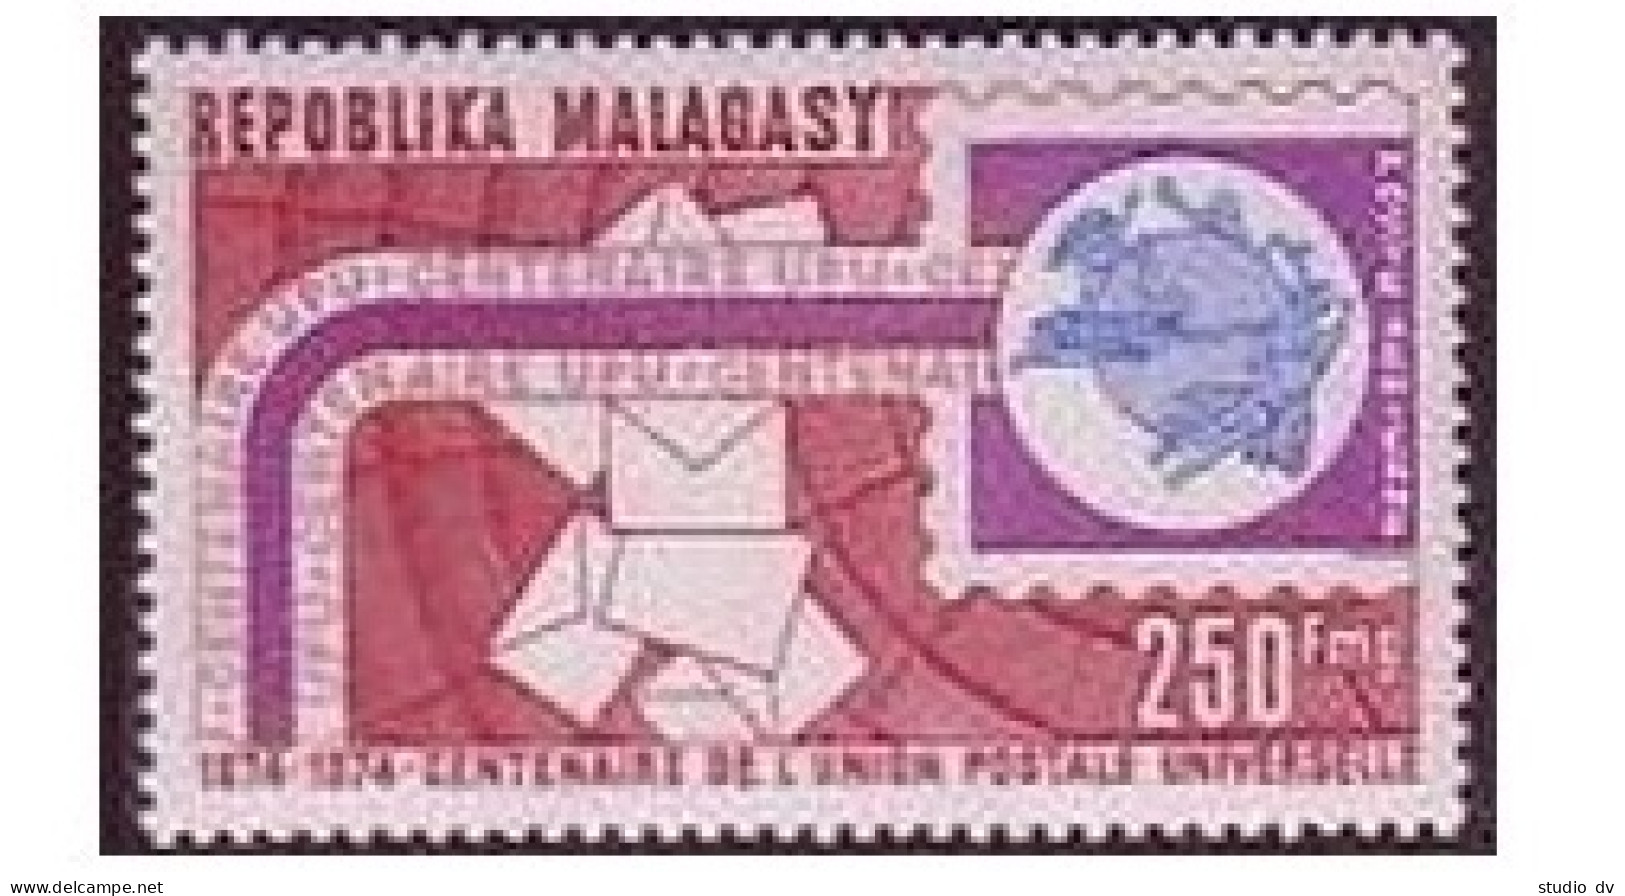 Malagasy C129,MNH.Michel 716. UPU-100,1974.Letters. - Madagascar (1960-...)